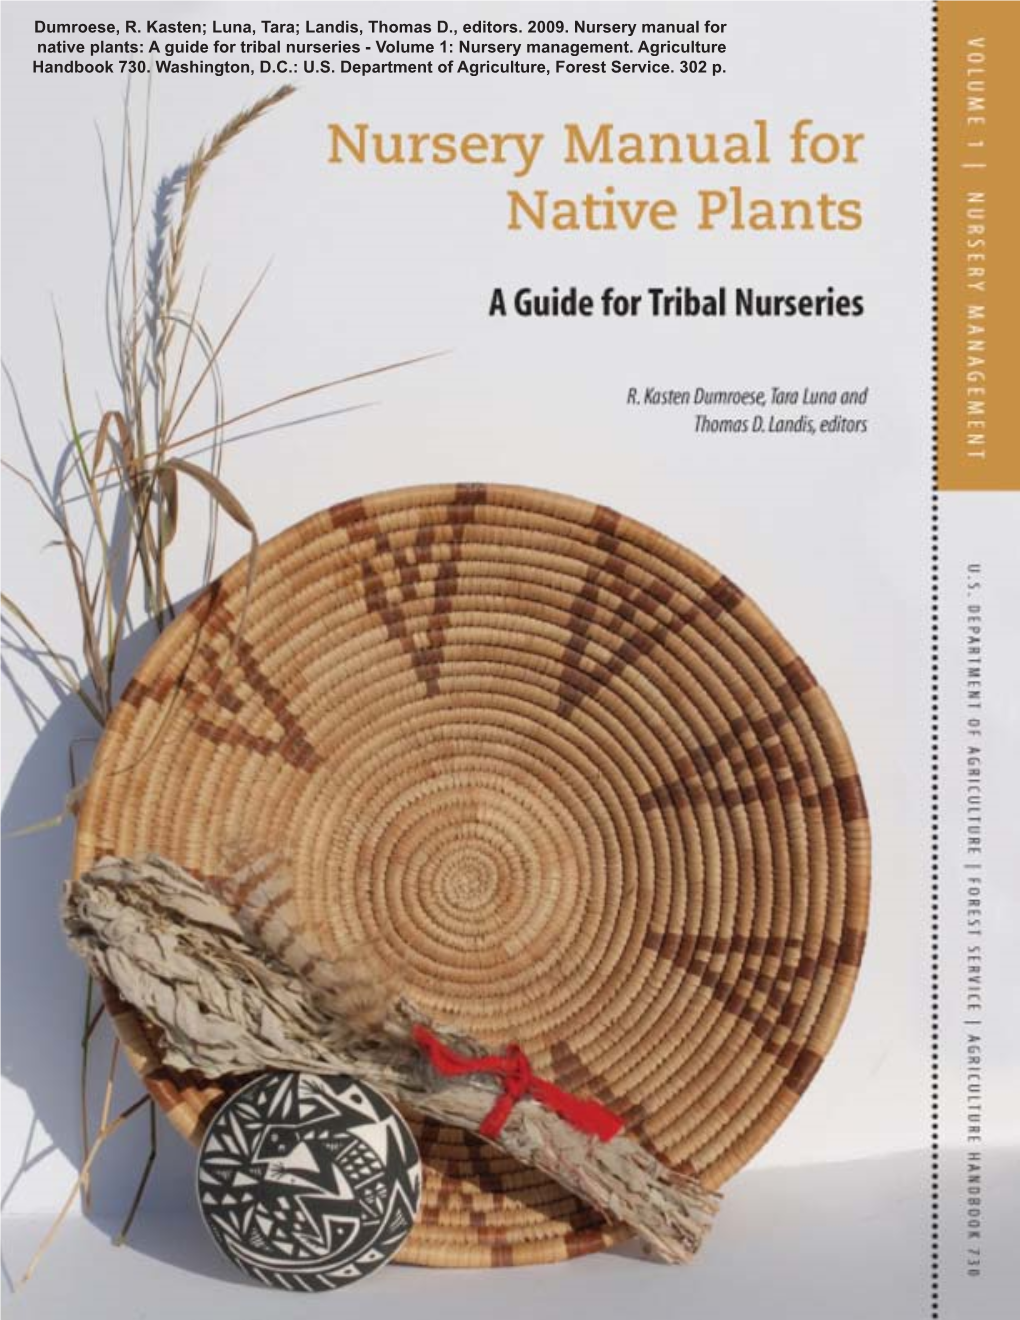 Nursery Manual for Native Plants: a Guide for Tribal Nurseries - Volume 1: Nursery Management